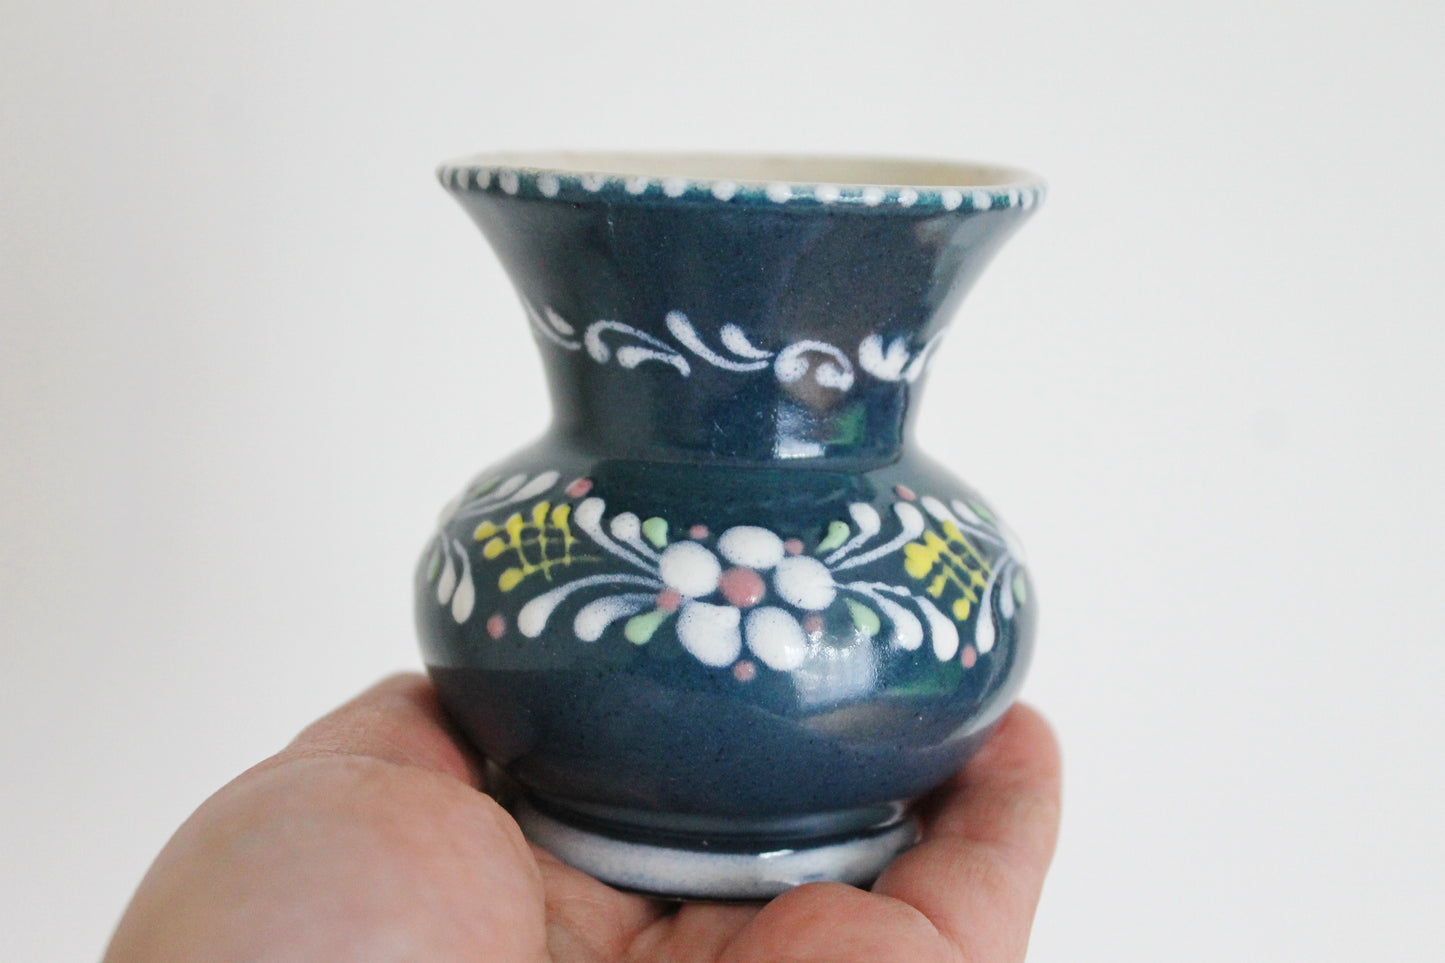 Vintage porcelain small vase 3.2 inches - made in Germany  - mini vase - cute vintage mini vase - 1970-1980s